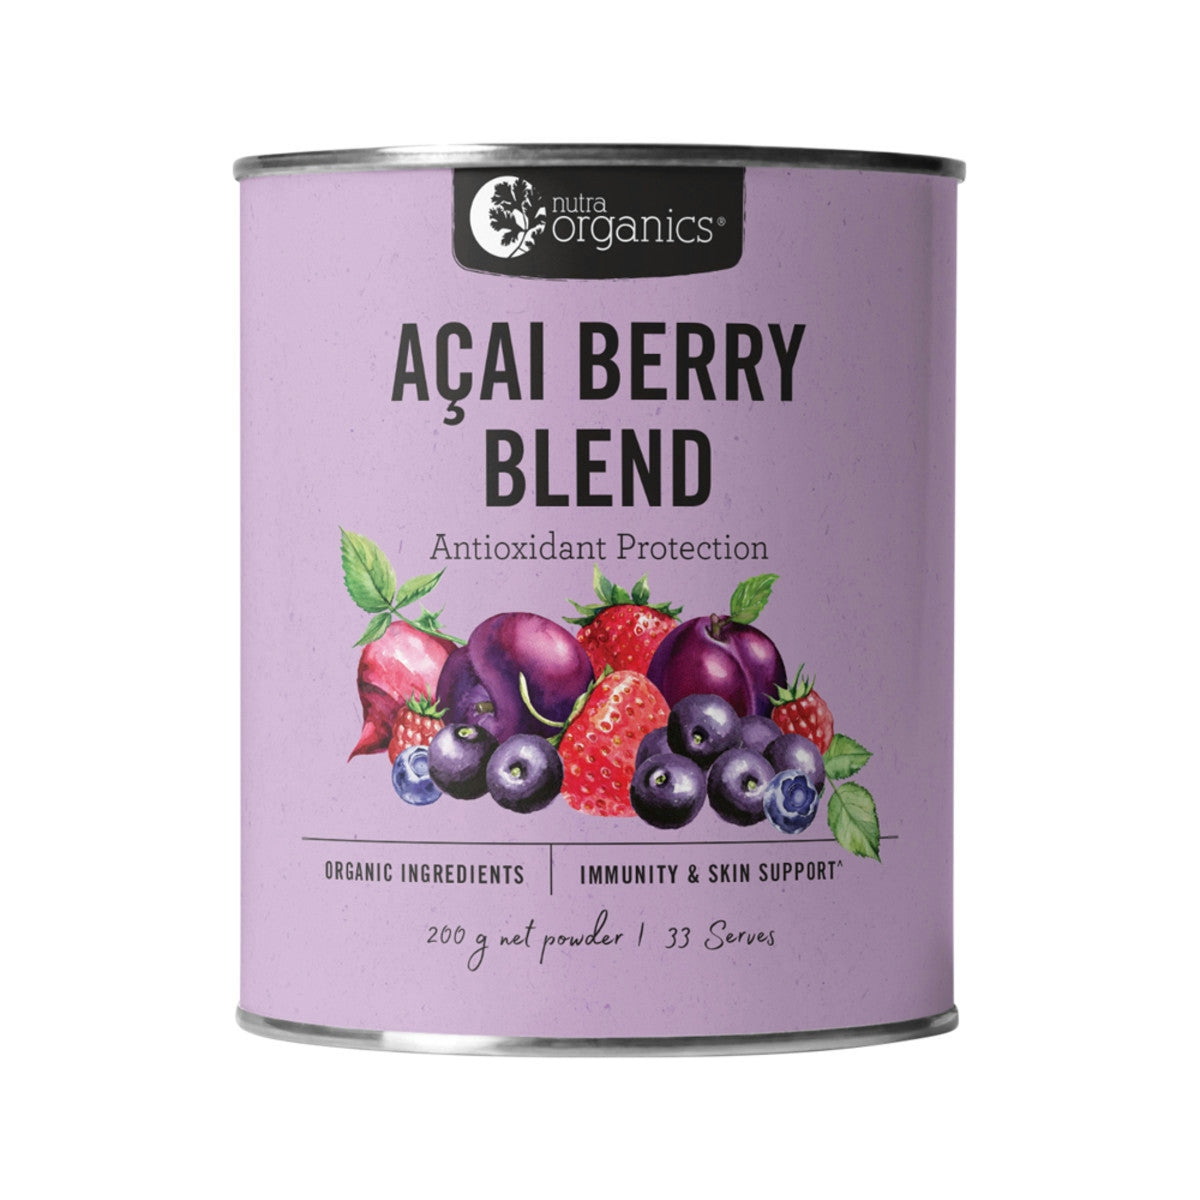 image of Nutra Organics Acai Berry Blend (Antioxidant Protection) Powder 200g on white background 